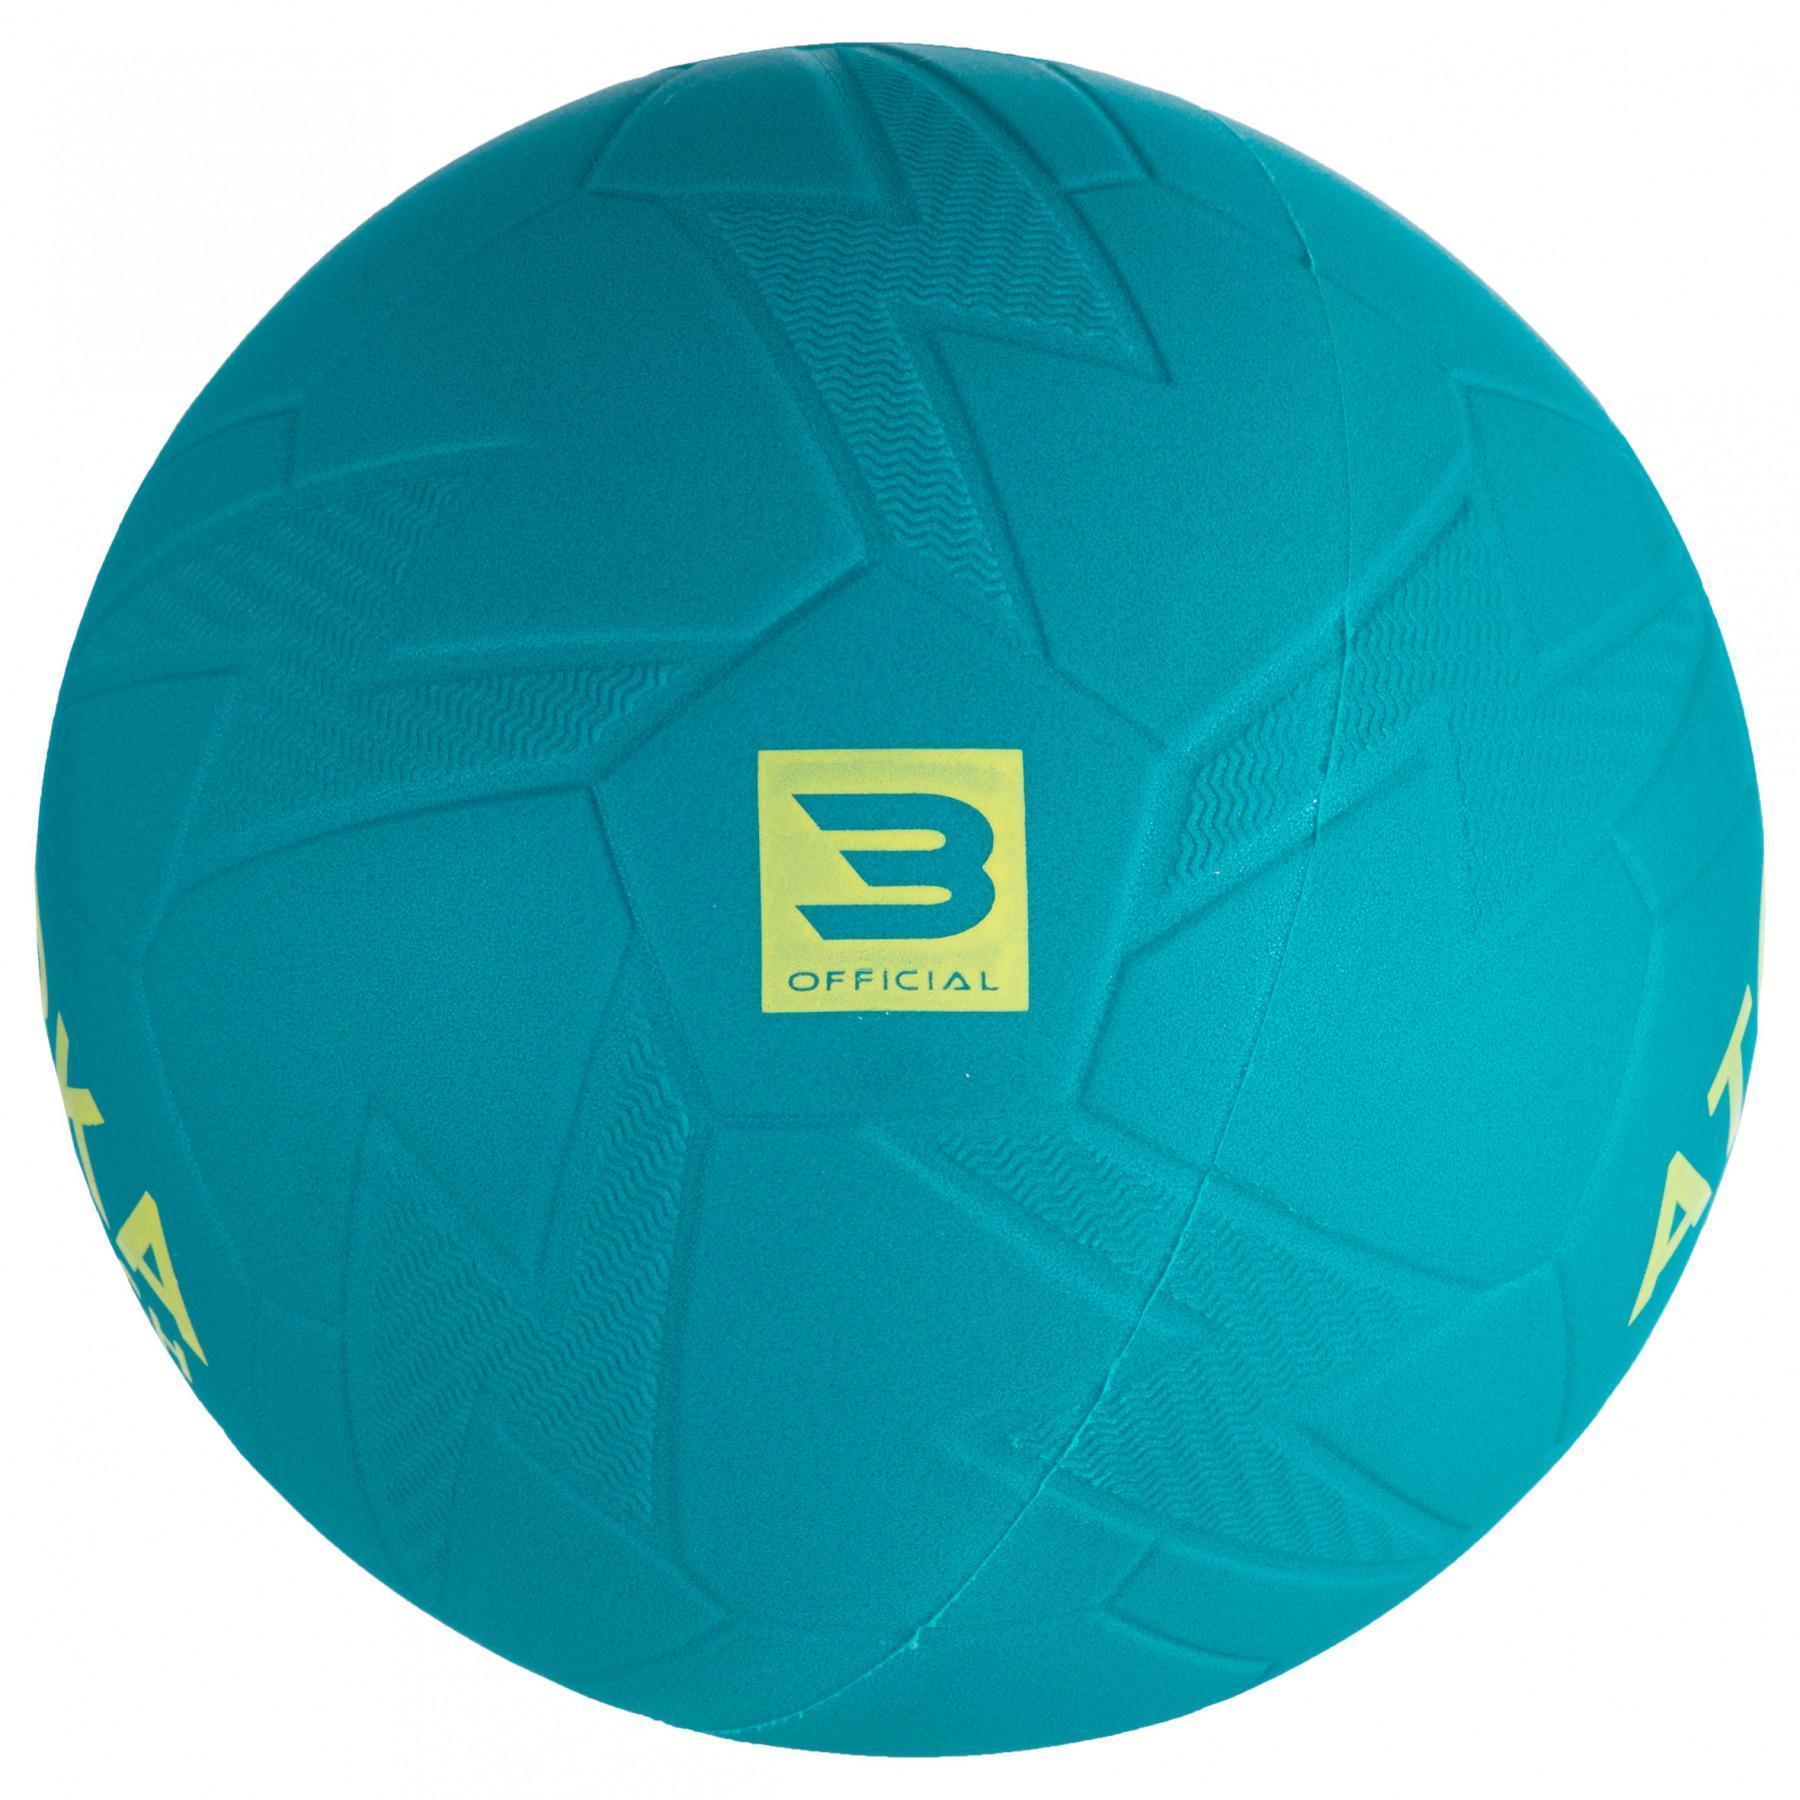 Beachhandball Atorka HB500B - Taille 3